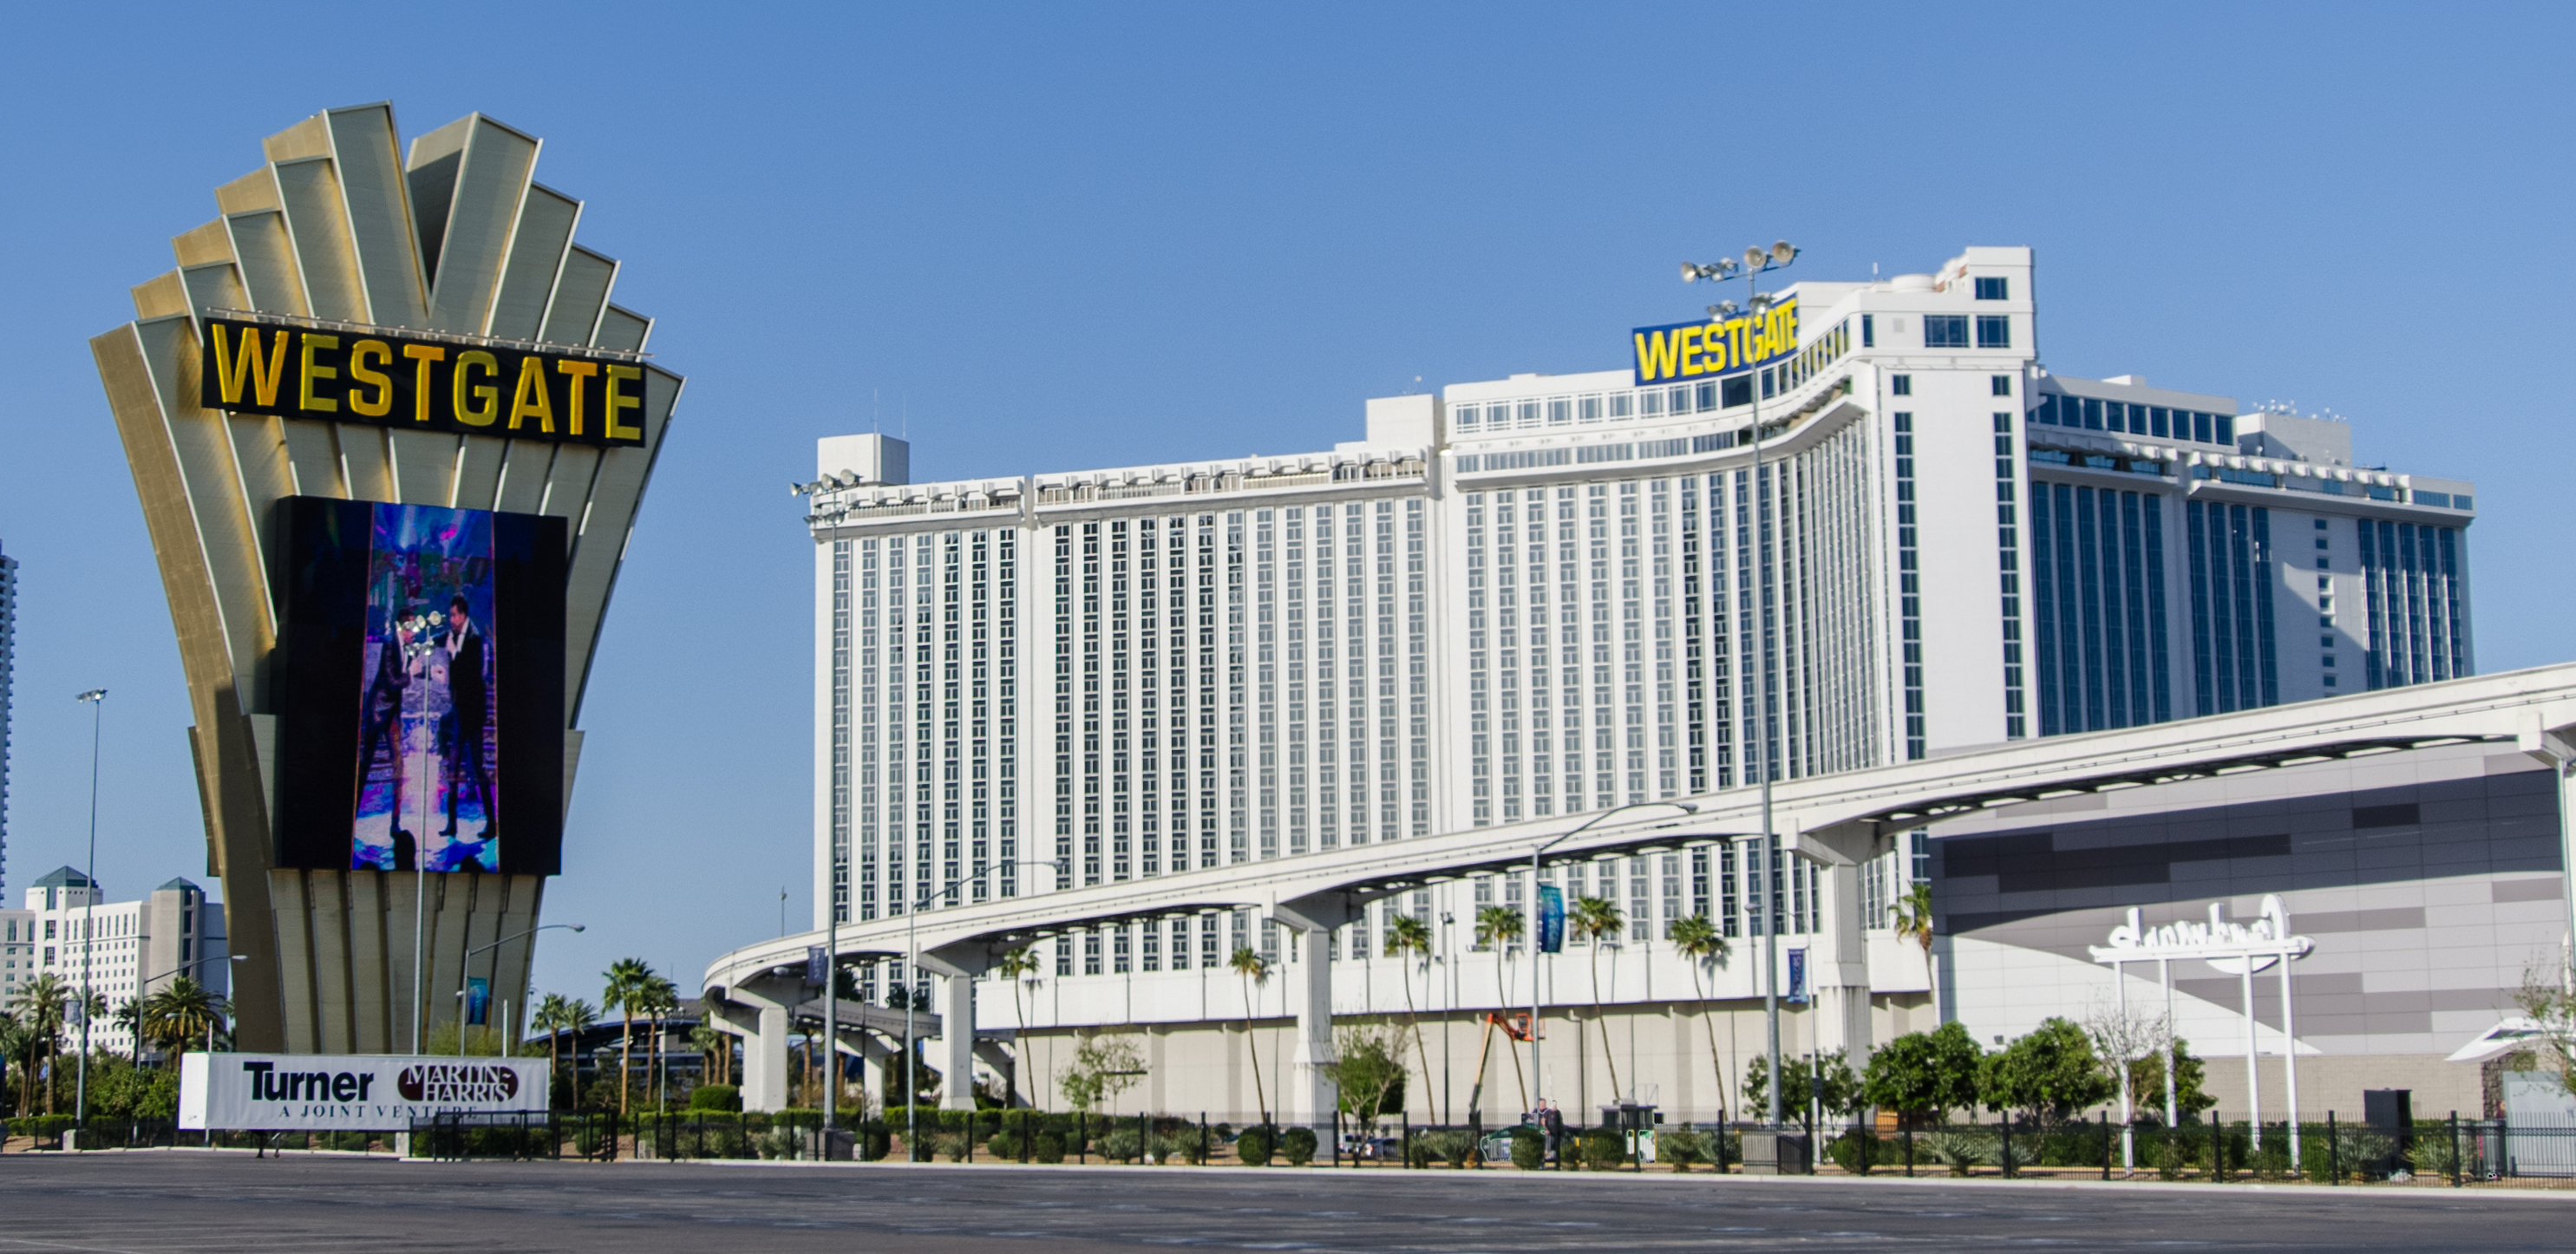 westgate hotel and casino las vegas nevada